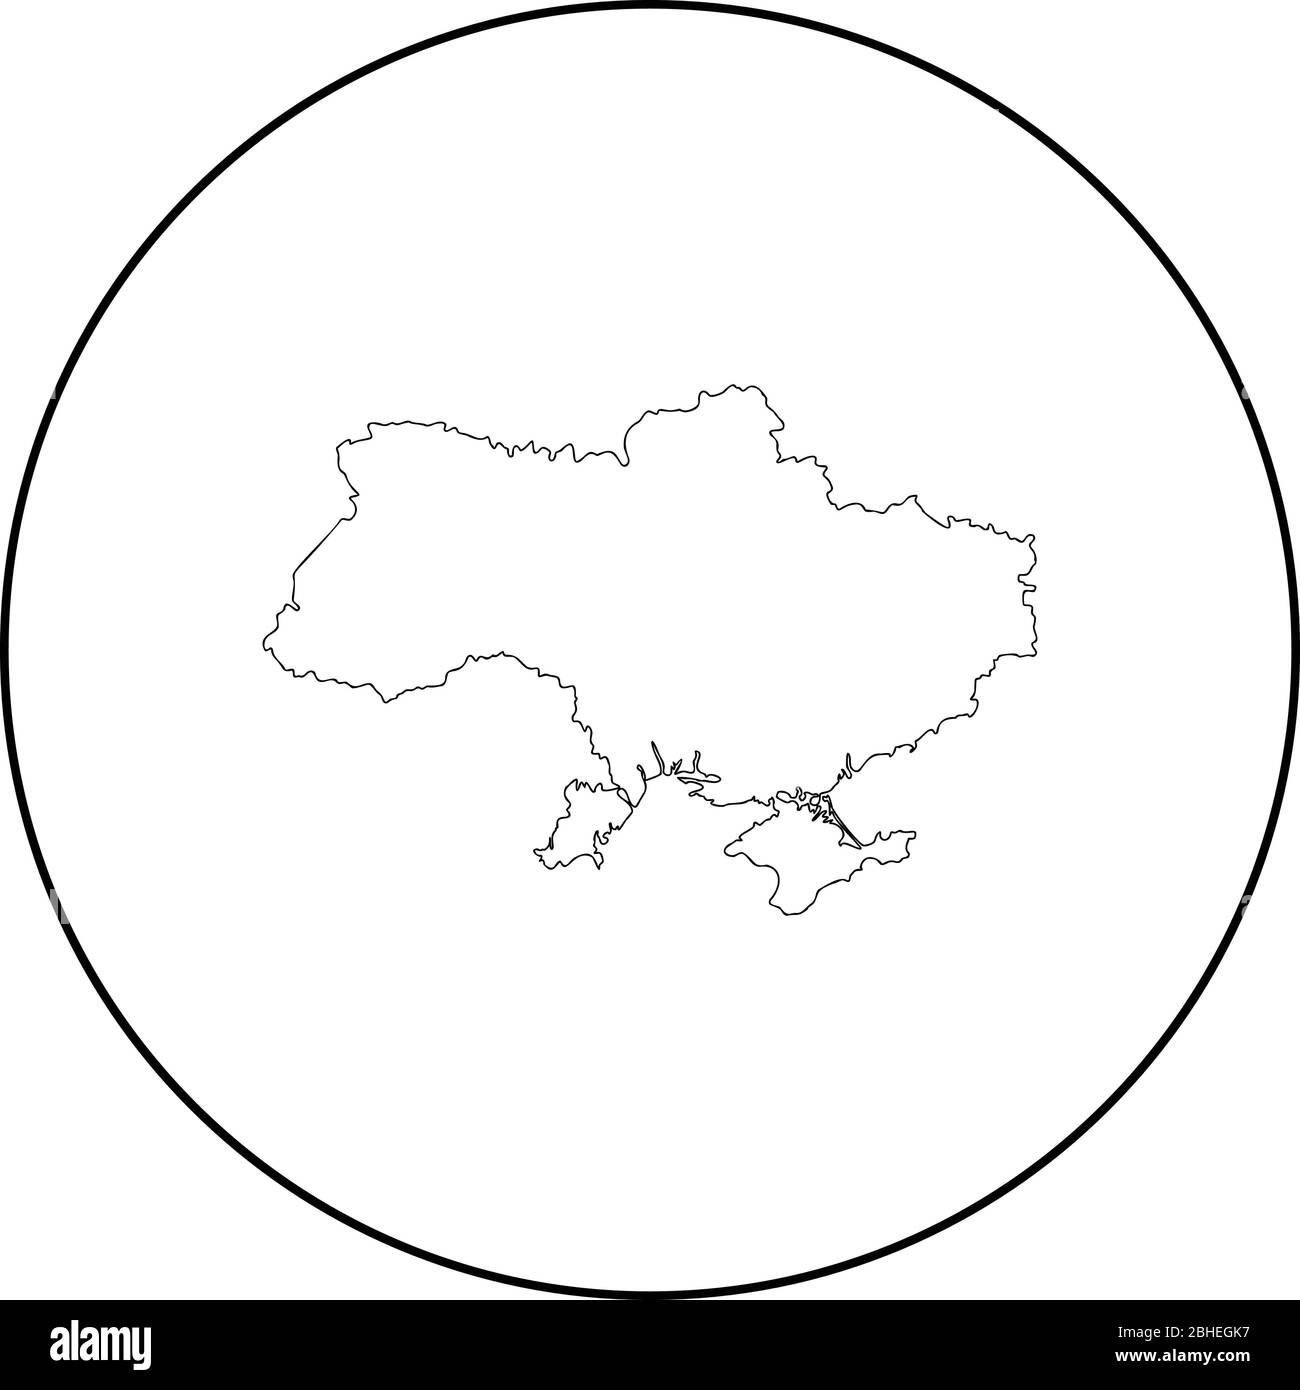 Karte Ukraine Symbol im Kreis runde Kontur schwarz Farbe Vektor Illustration flach Stil einfaches Bild Stock Vektor